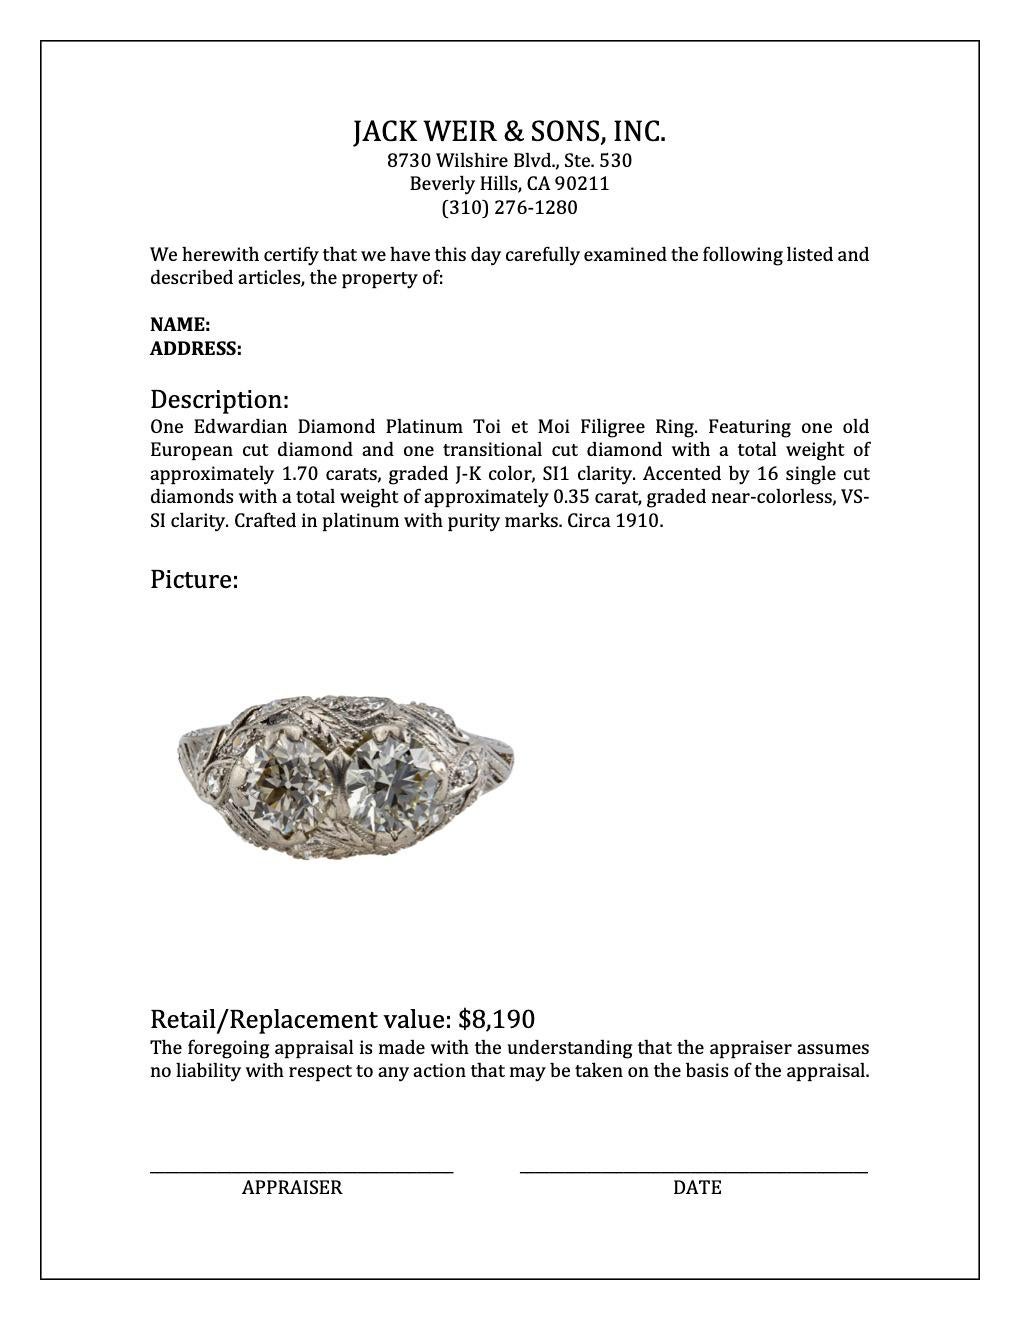 Old European Cut Edwardian Diamond Platinum Toi et Moi Filigree Ring